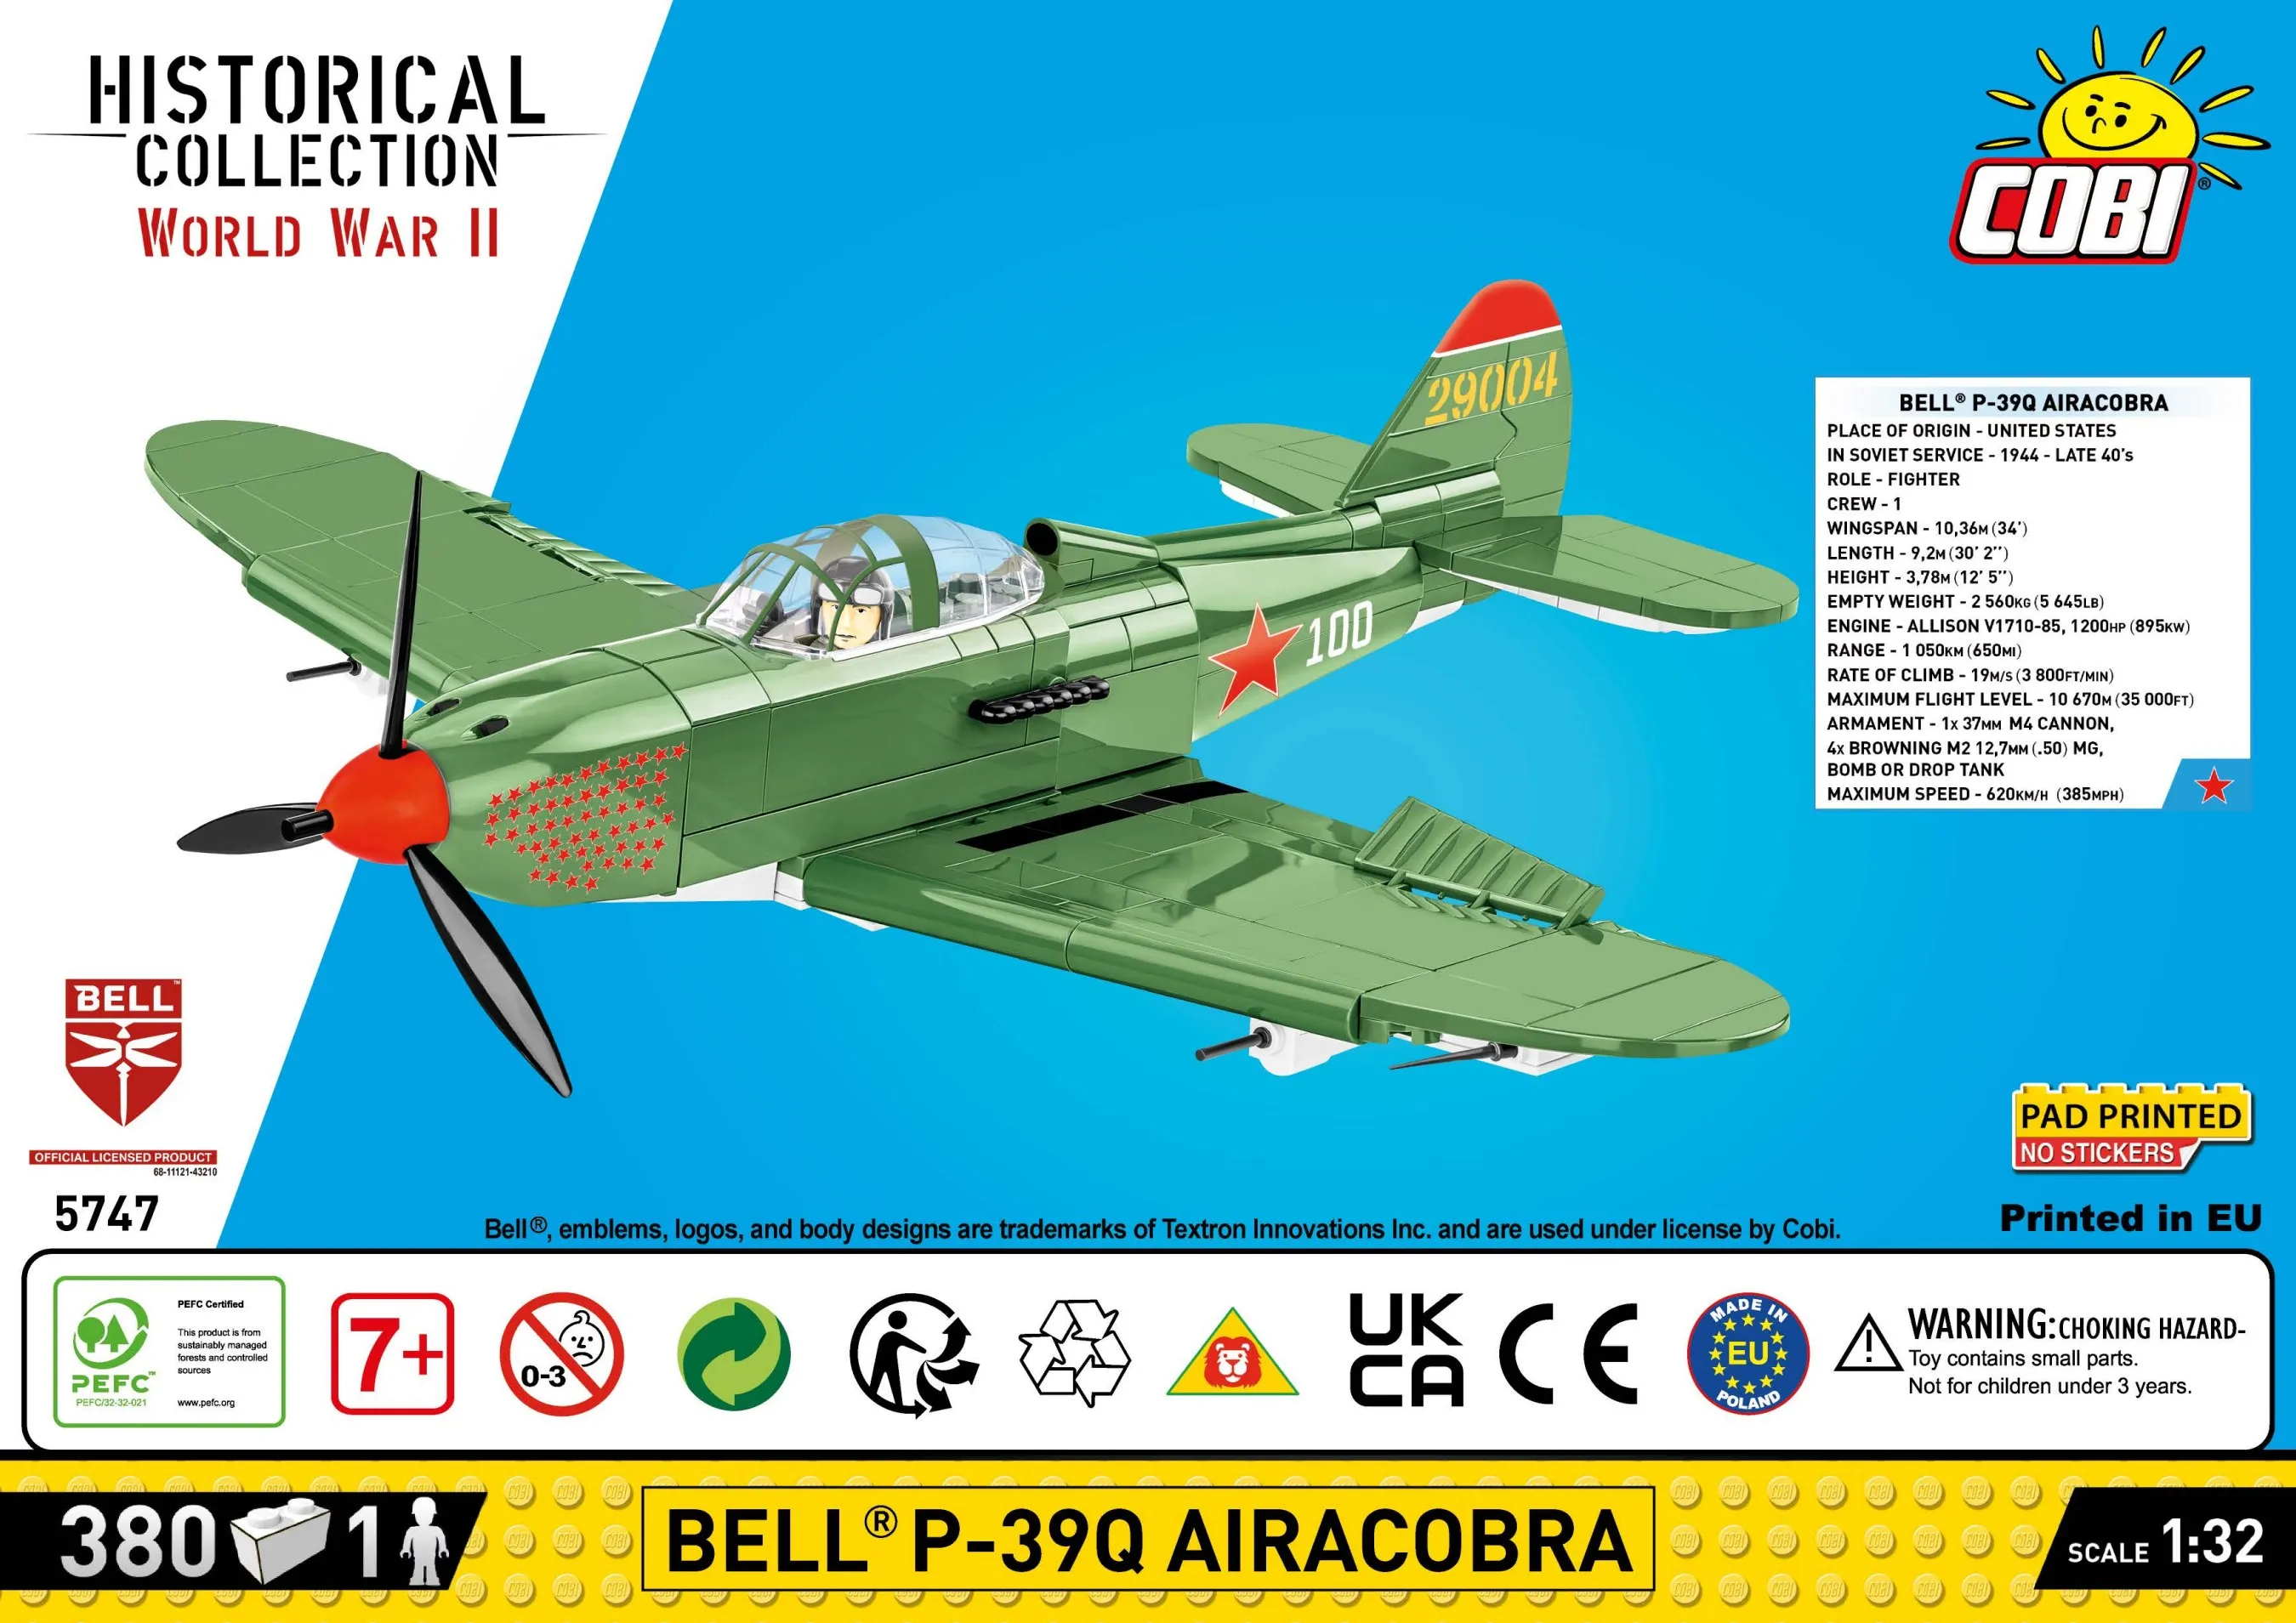 Cobi - Historical Collection World War II Bell P-39Q Airacobra Sovi | Set 5747